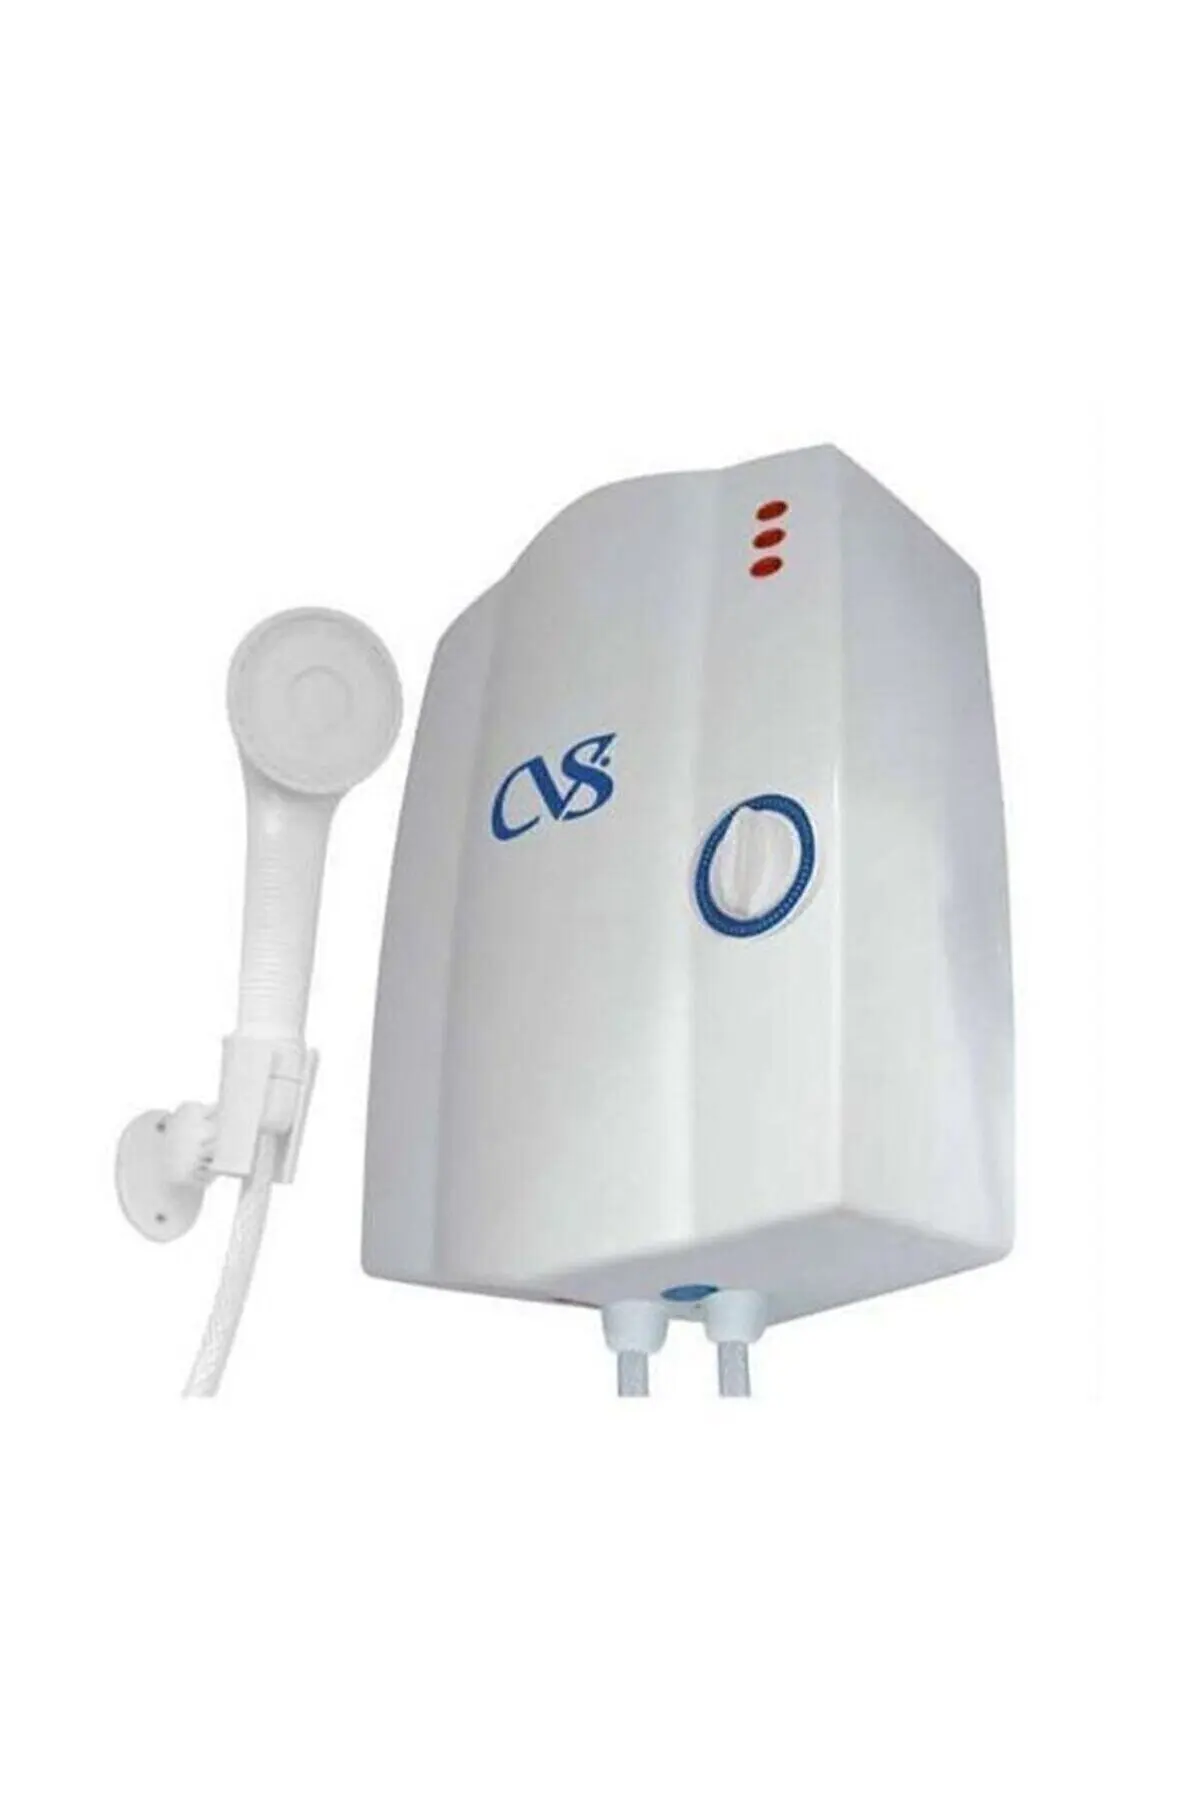 CVS 5250 Ilıca Şohben Electric İnstantaneous Water Heater High Technological Bathroom Safety Valve DoubleThermostat System,